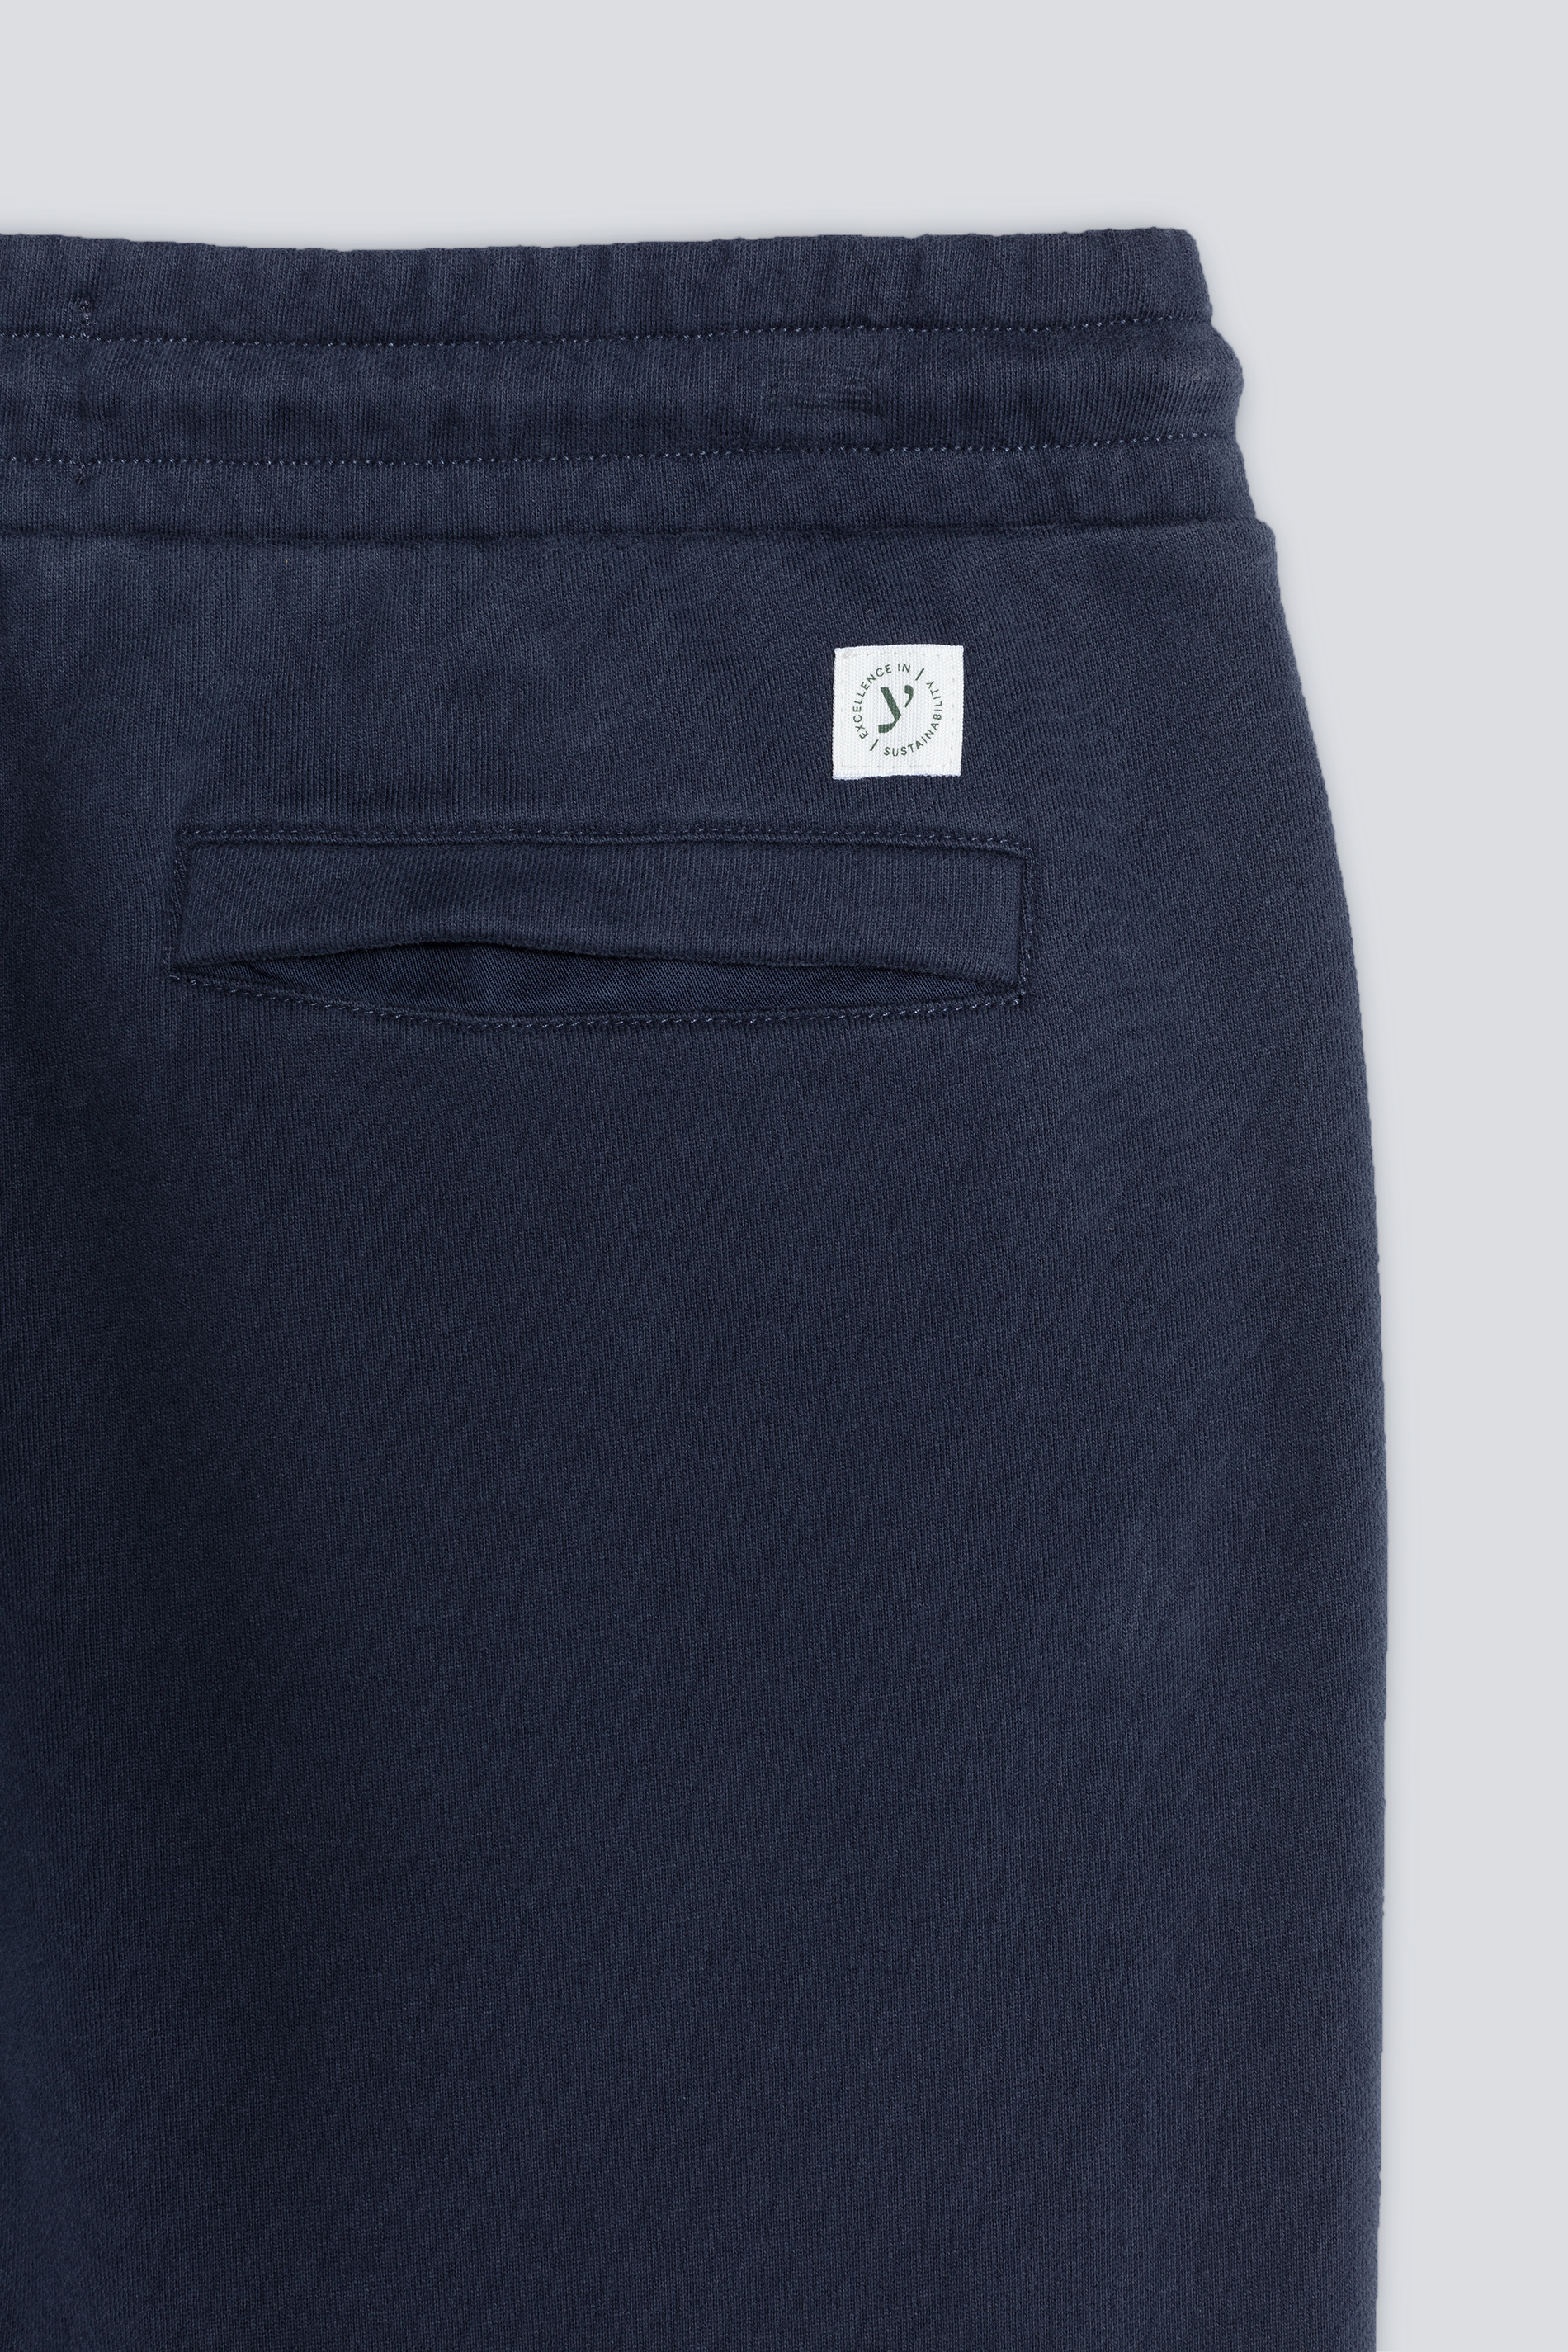 Track pants Blue Nights Serie Soft Felpa Detail View 01 | mey®